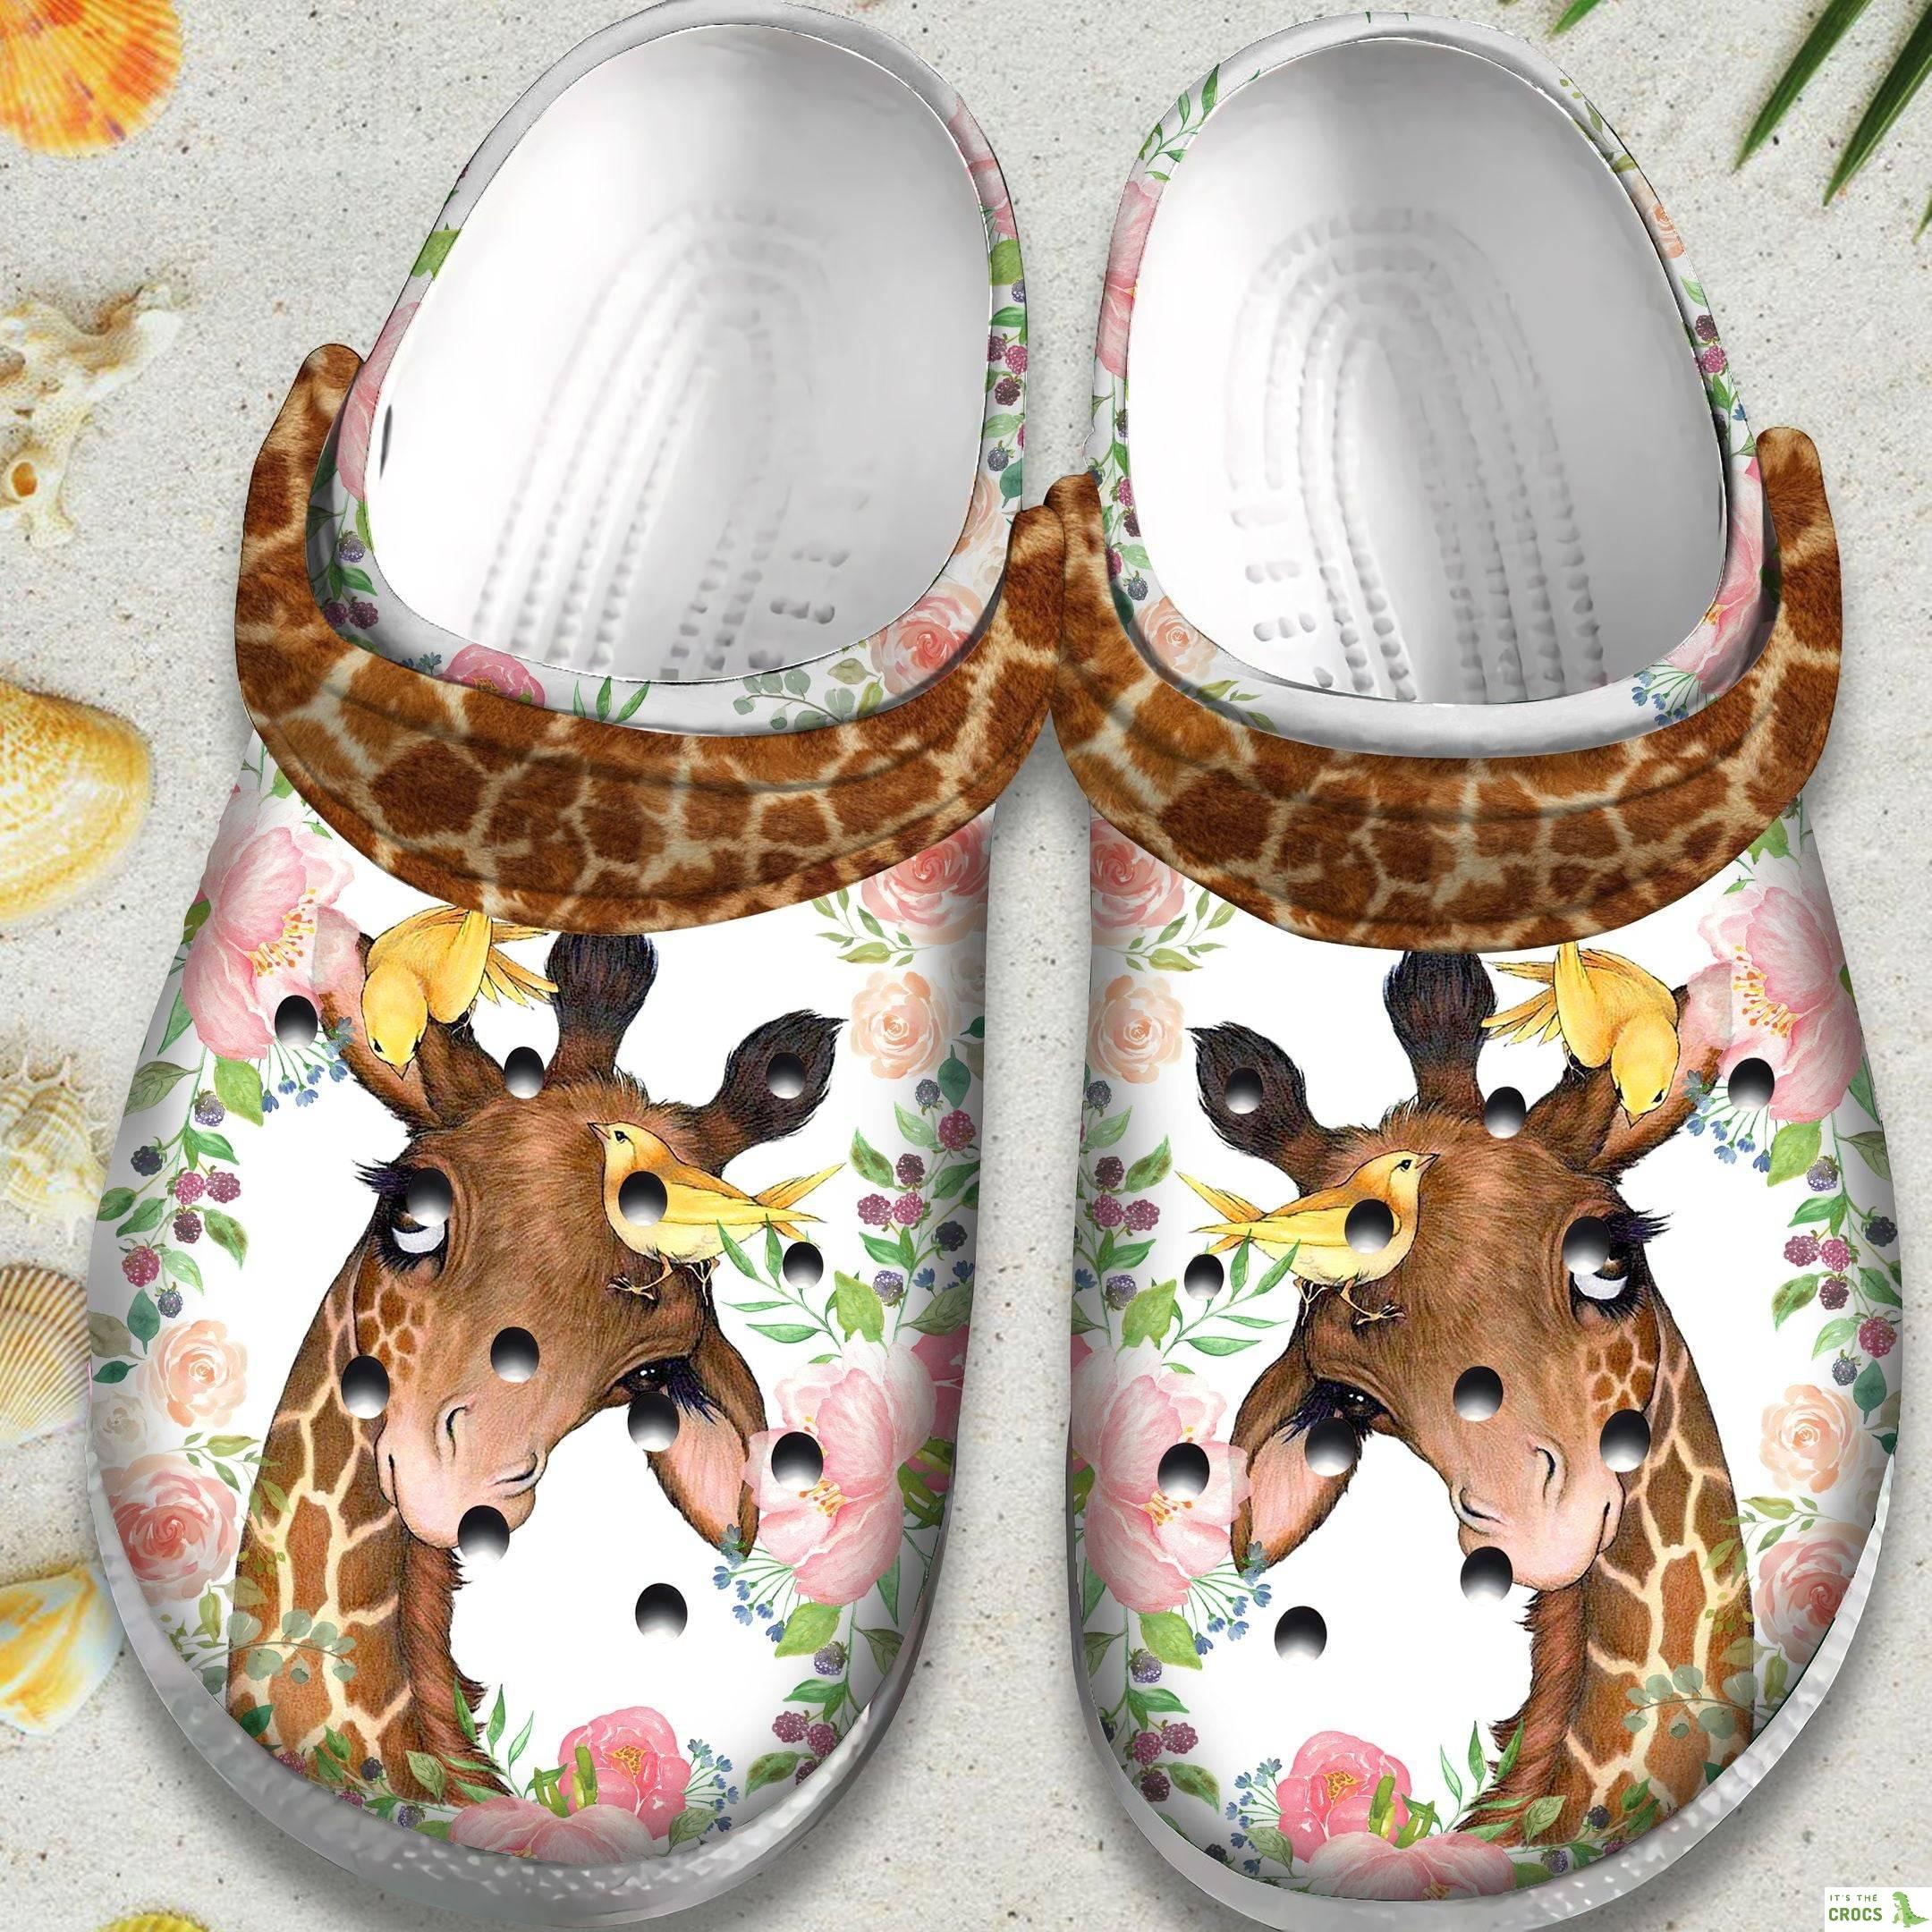 Flower Giraffe With Bird Shoes – Cute Animal Outdoor Shoes Birthday Gift For Men Women Boy Girl